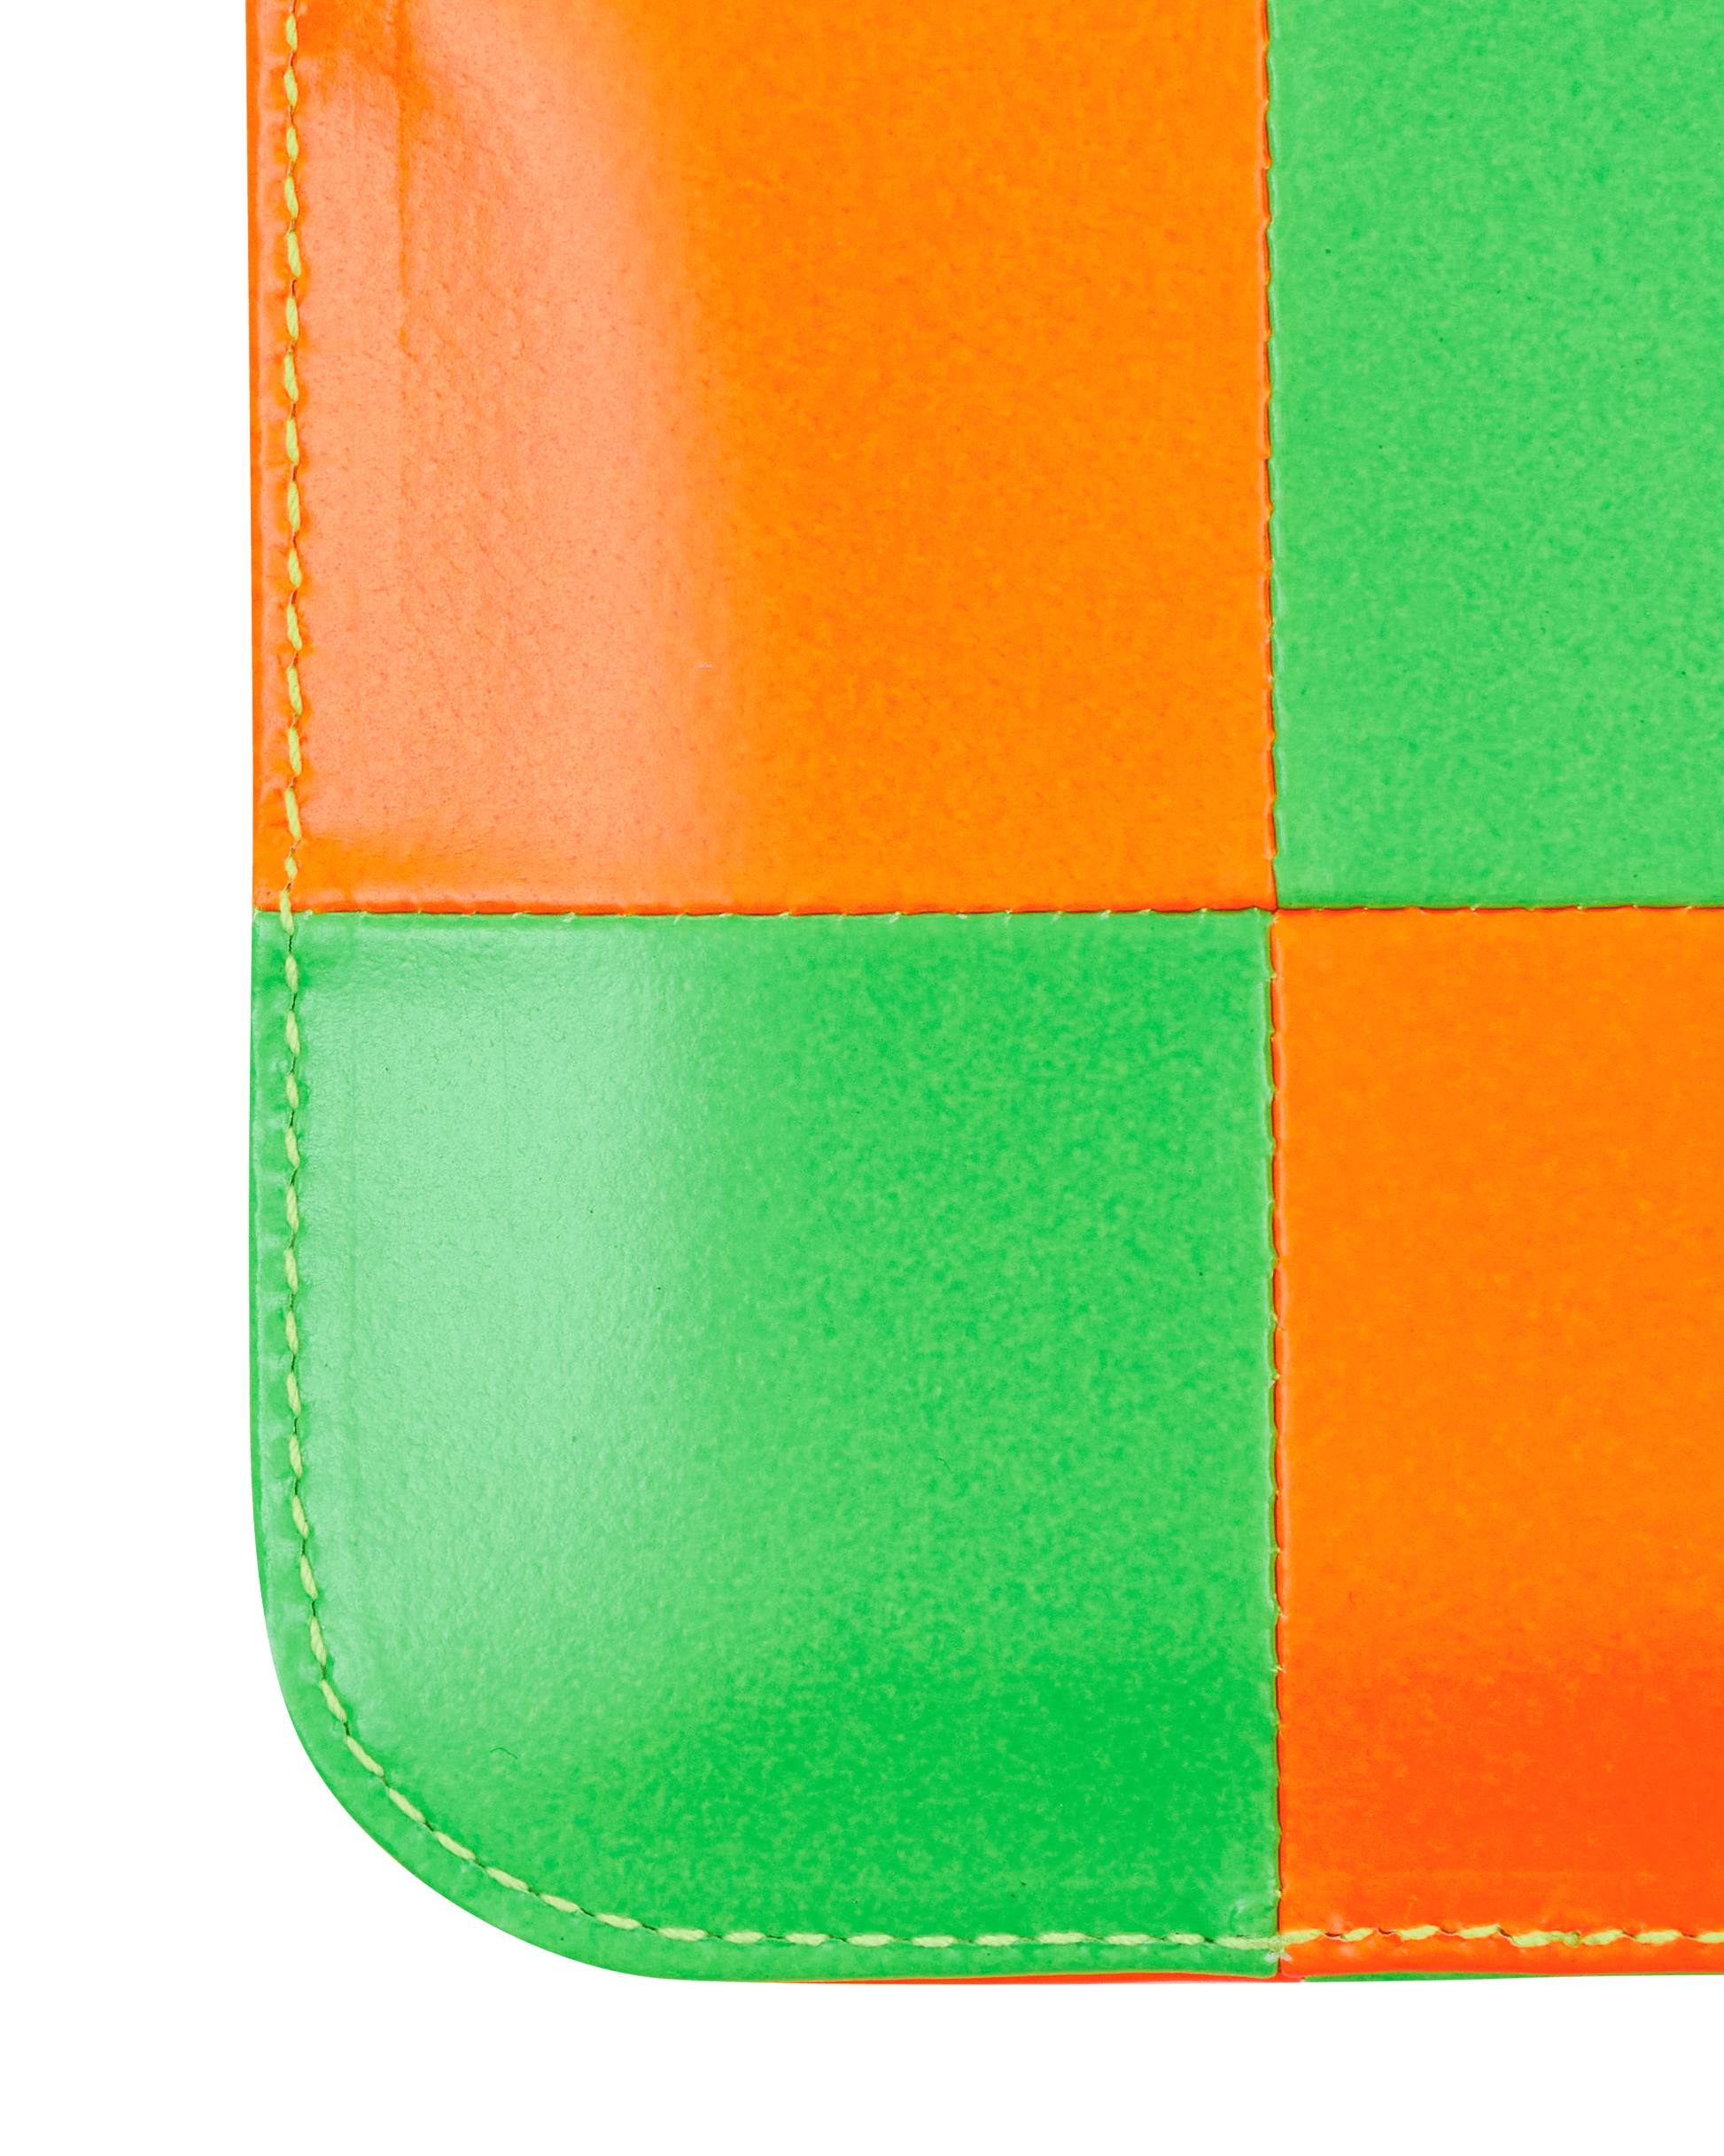 Comme Des Garcons Wallet Fluo Light Orange/ Green Wallets and Cardholders Wallets SA8100FS 1